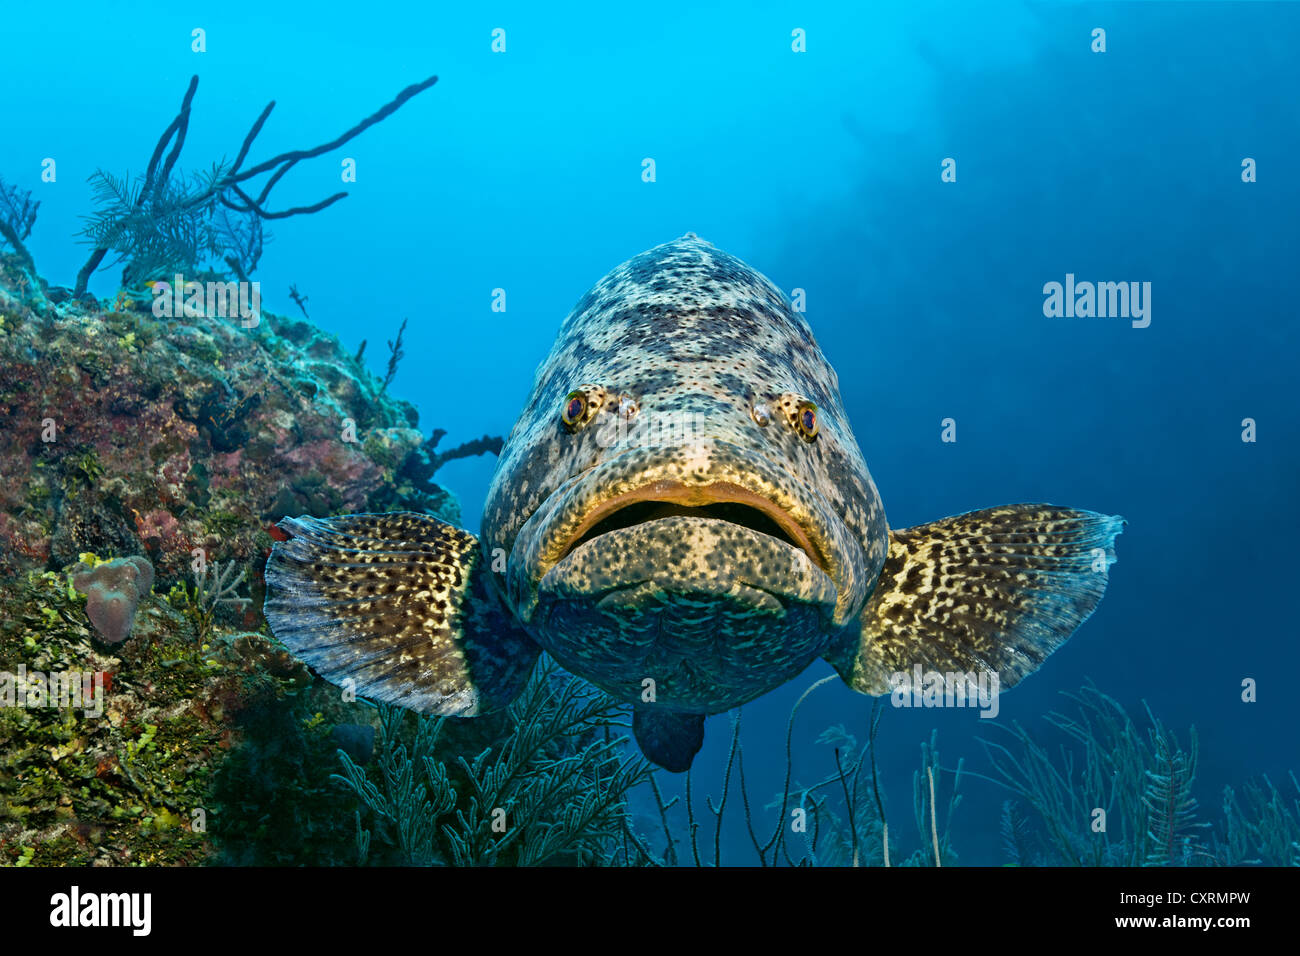 Atlantic goliath grouper fish or itajara or Jewfish (Epinephelus itajara) swimming in front of coral reef, Republic of Cuba Stock Photo